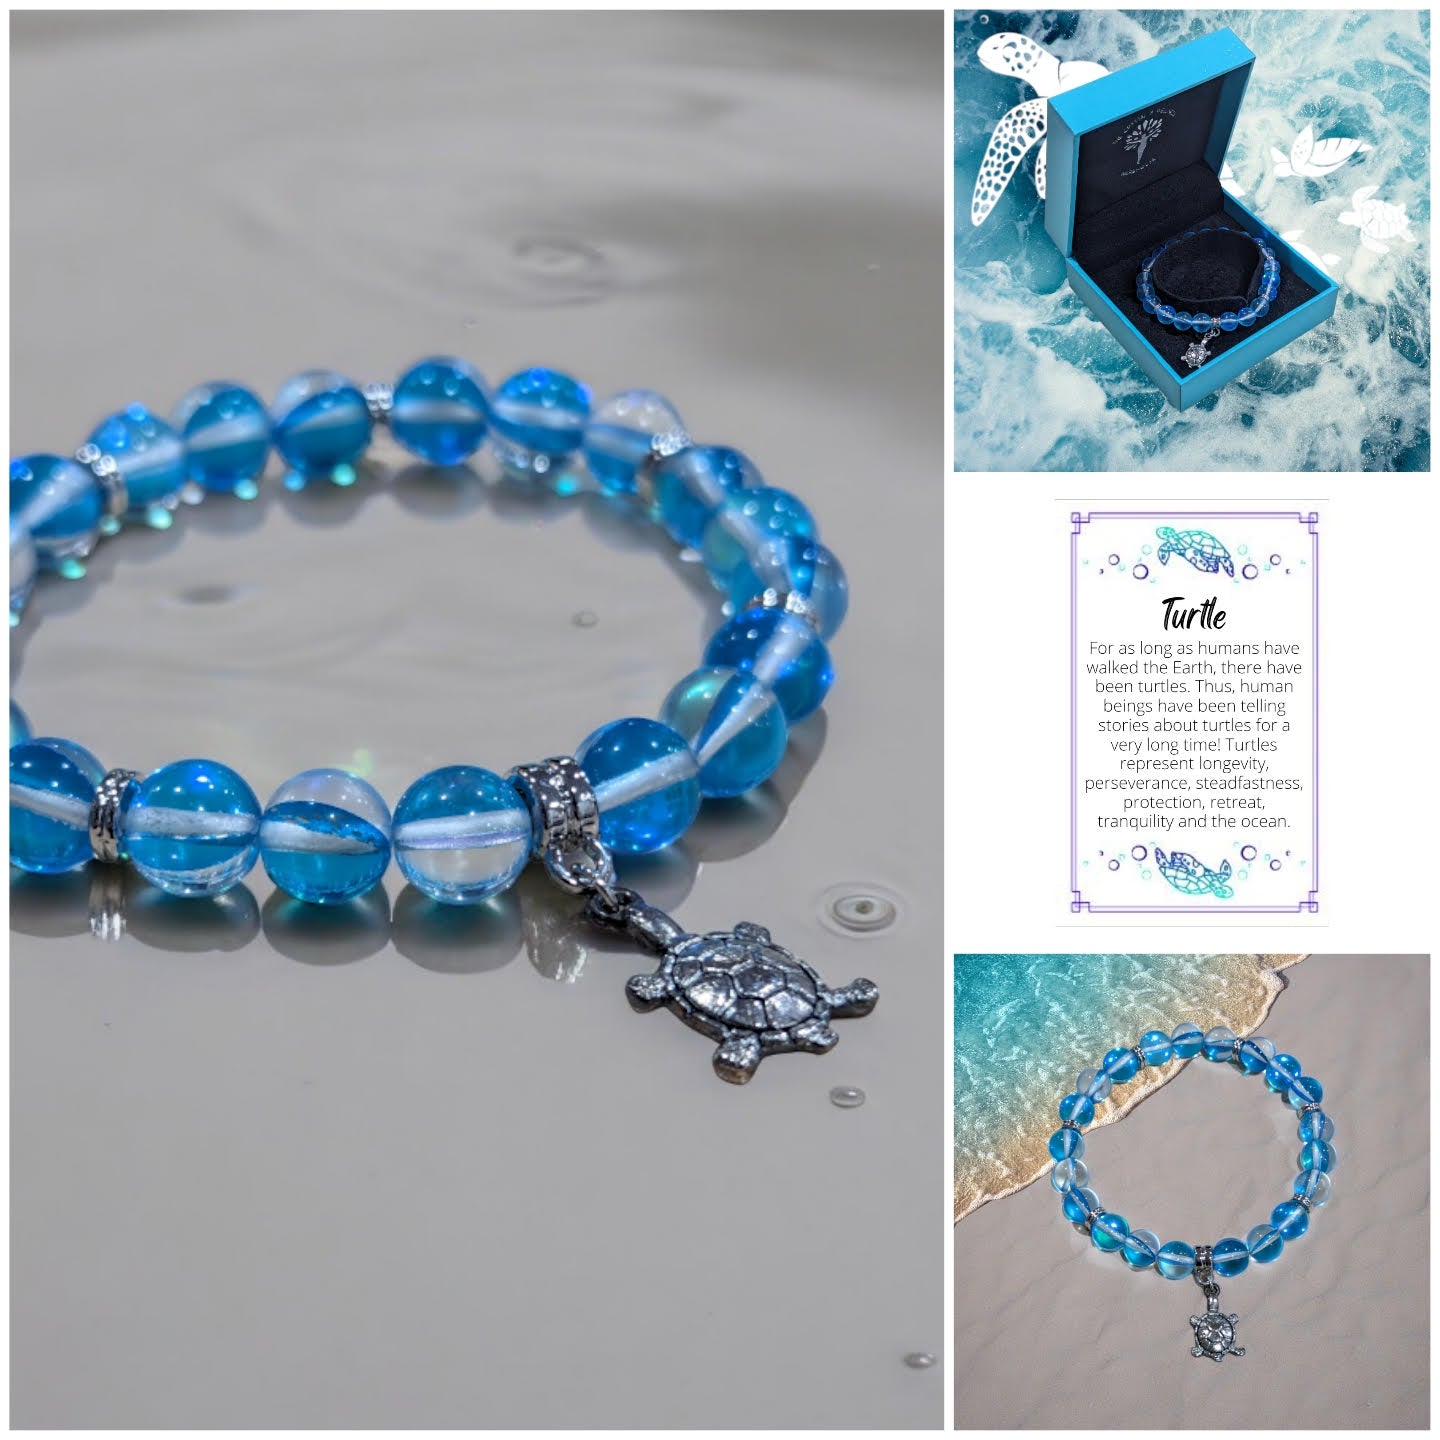 Aqua blue mermaid glass bead bracelet with turtle charm